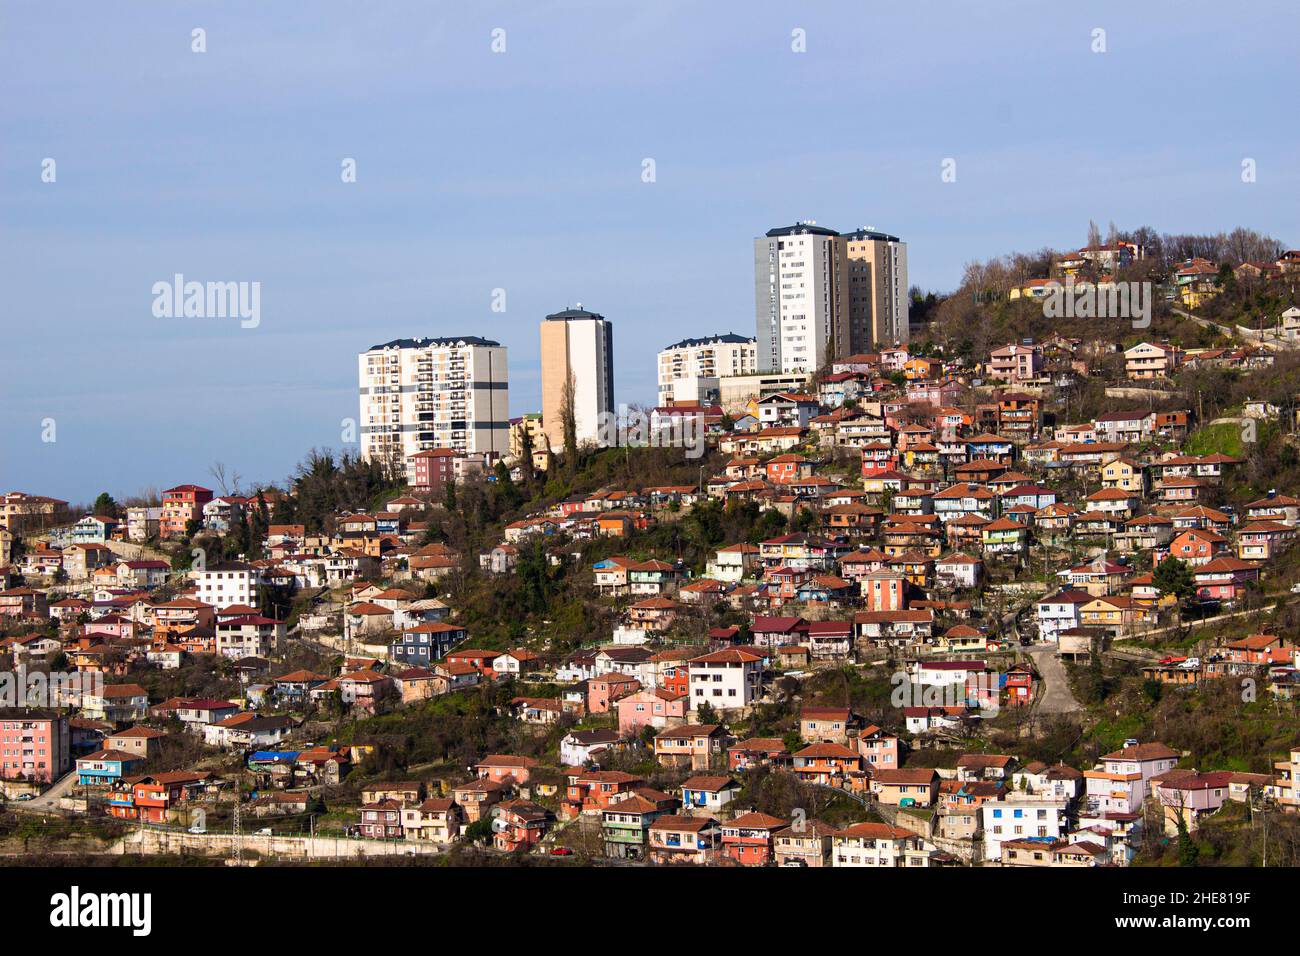 Crooked urbanization. slums between big buildings Stock Photo